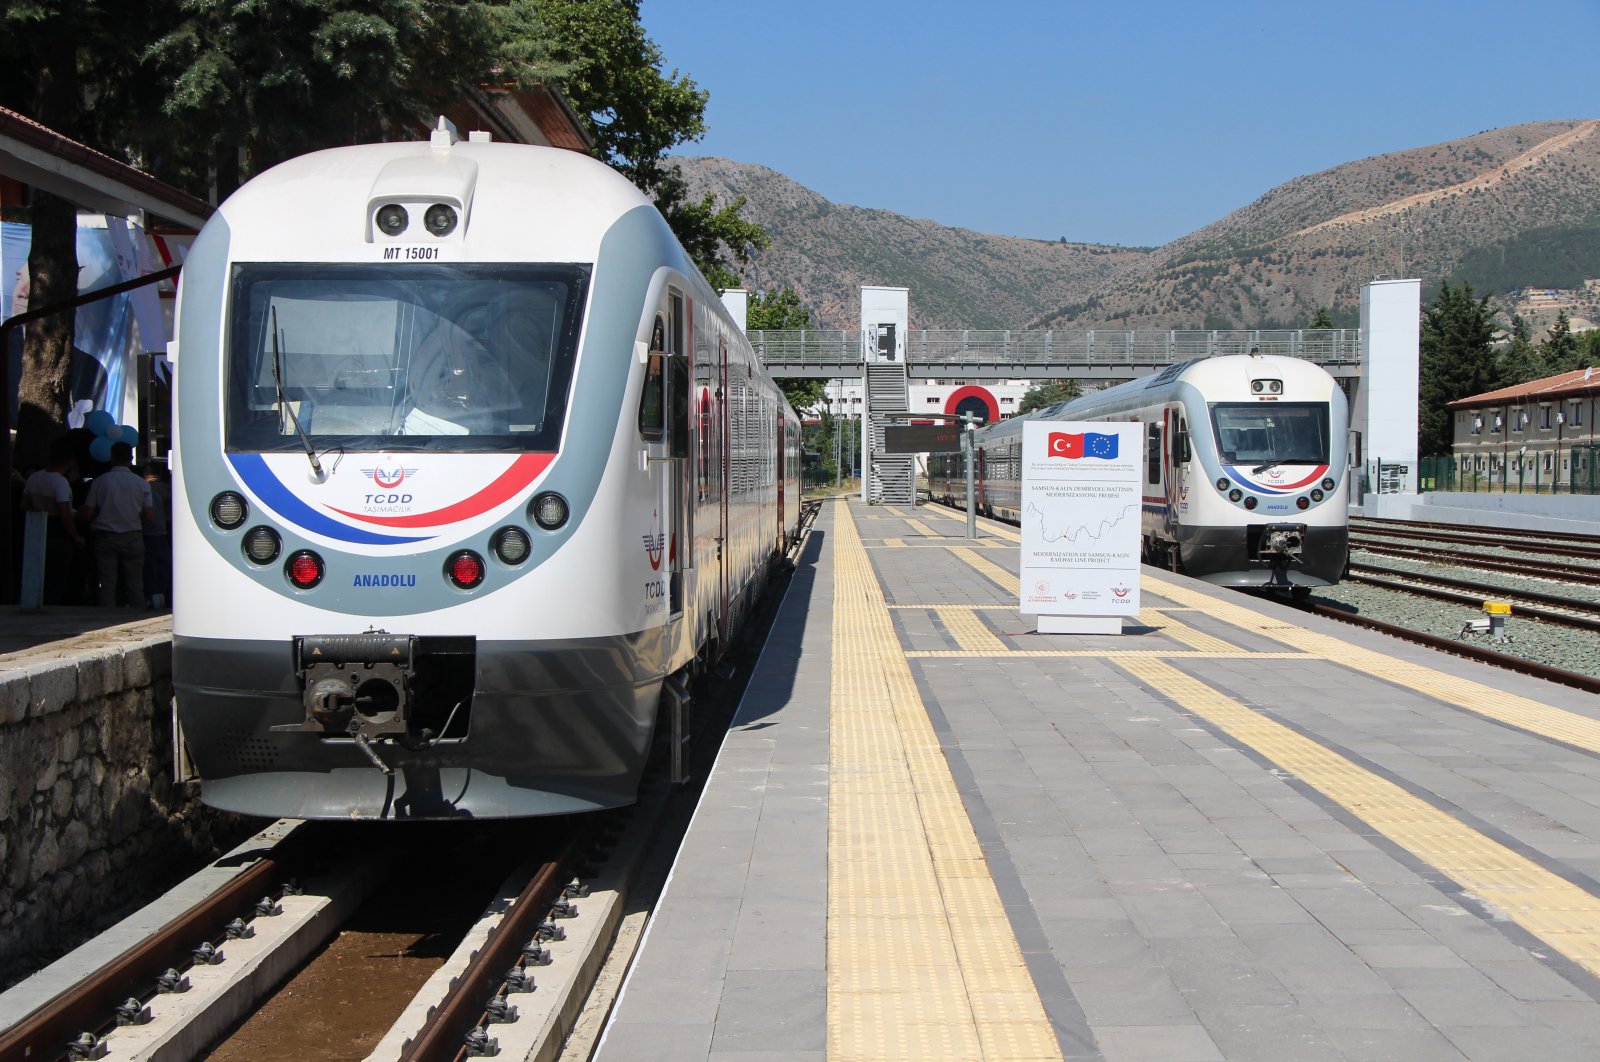 Trains wait at a station in Amasya, northern Turkey, June 21, 2022. (IHA PHOTO)